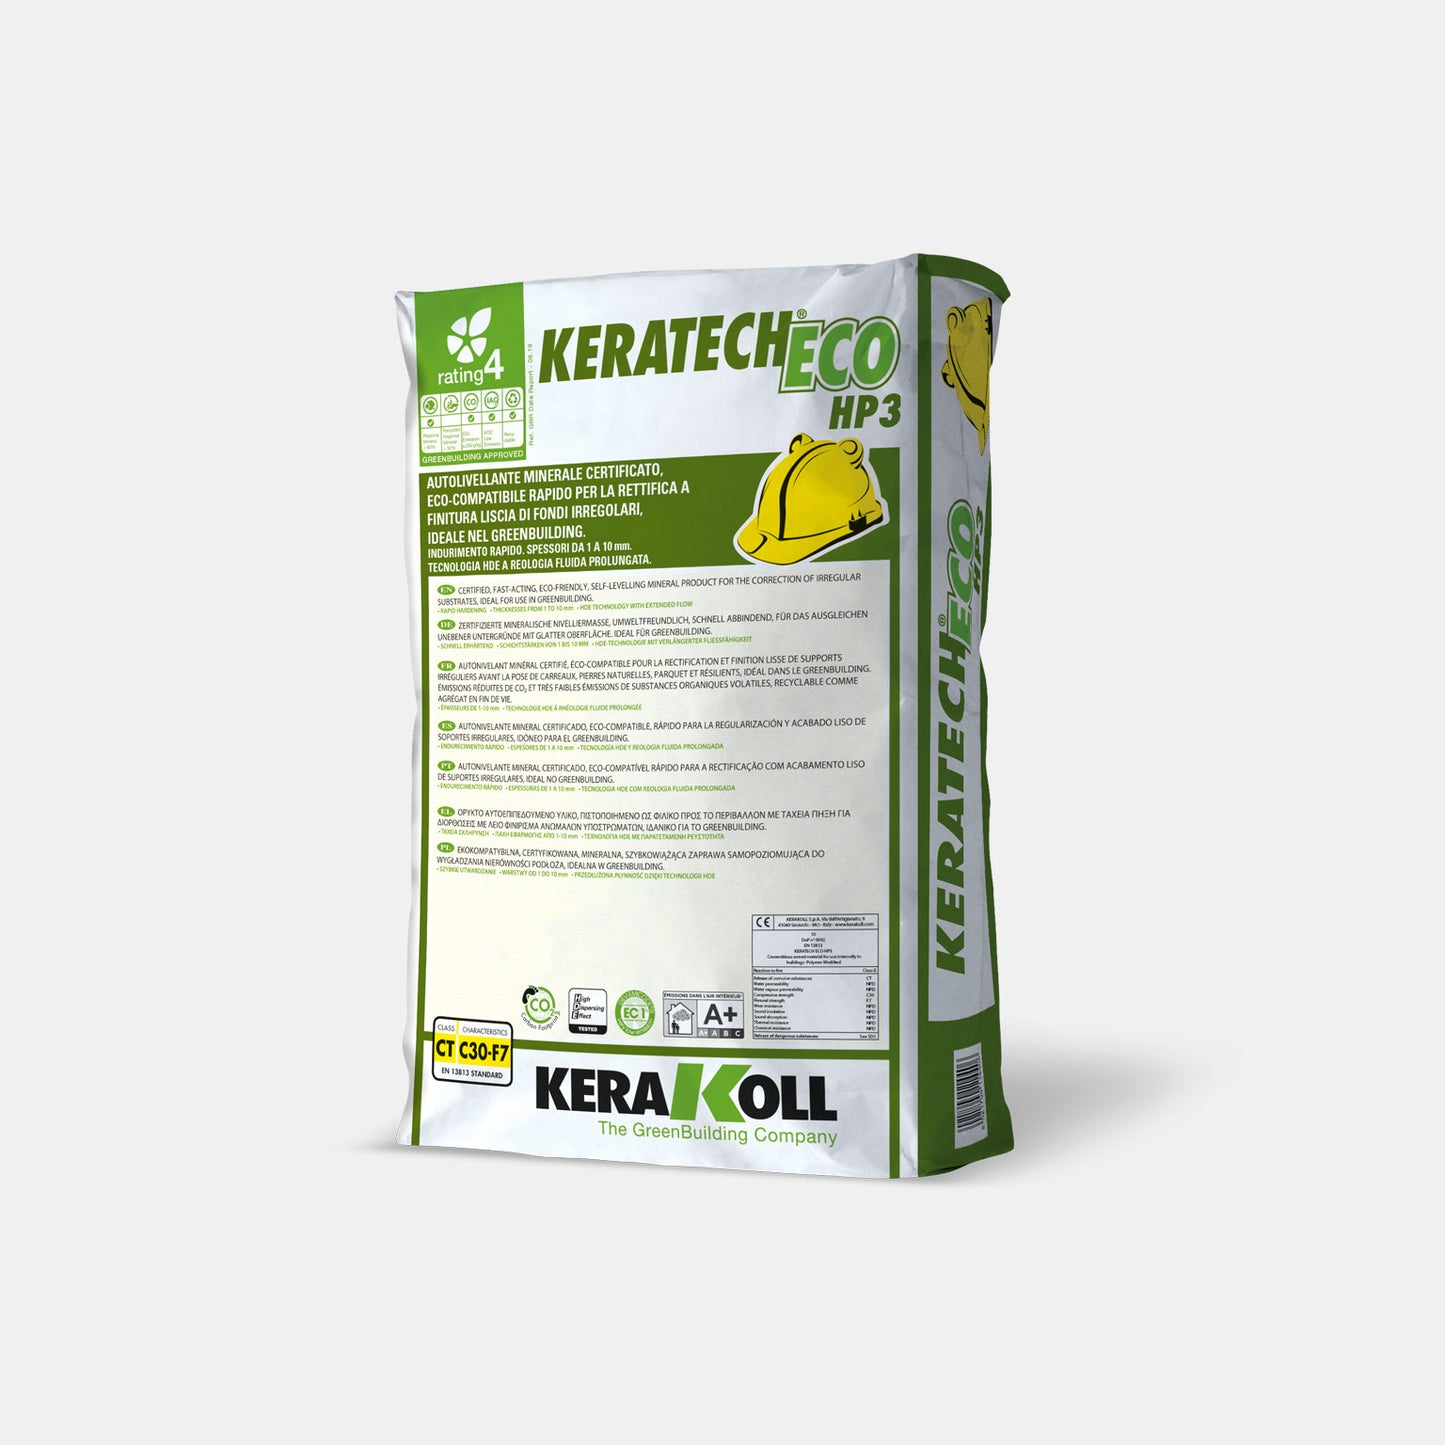 Keratech® Eco HP3